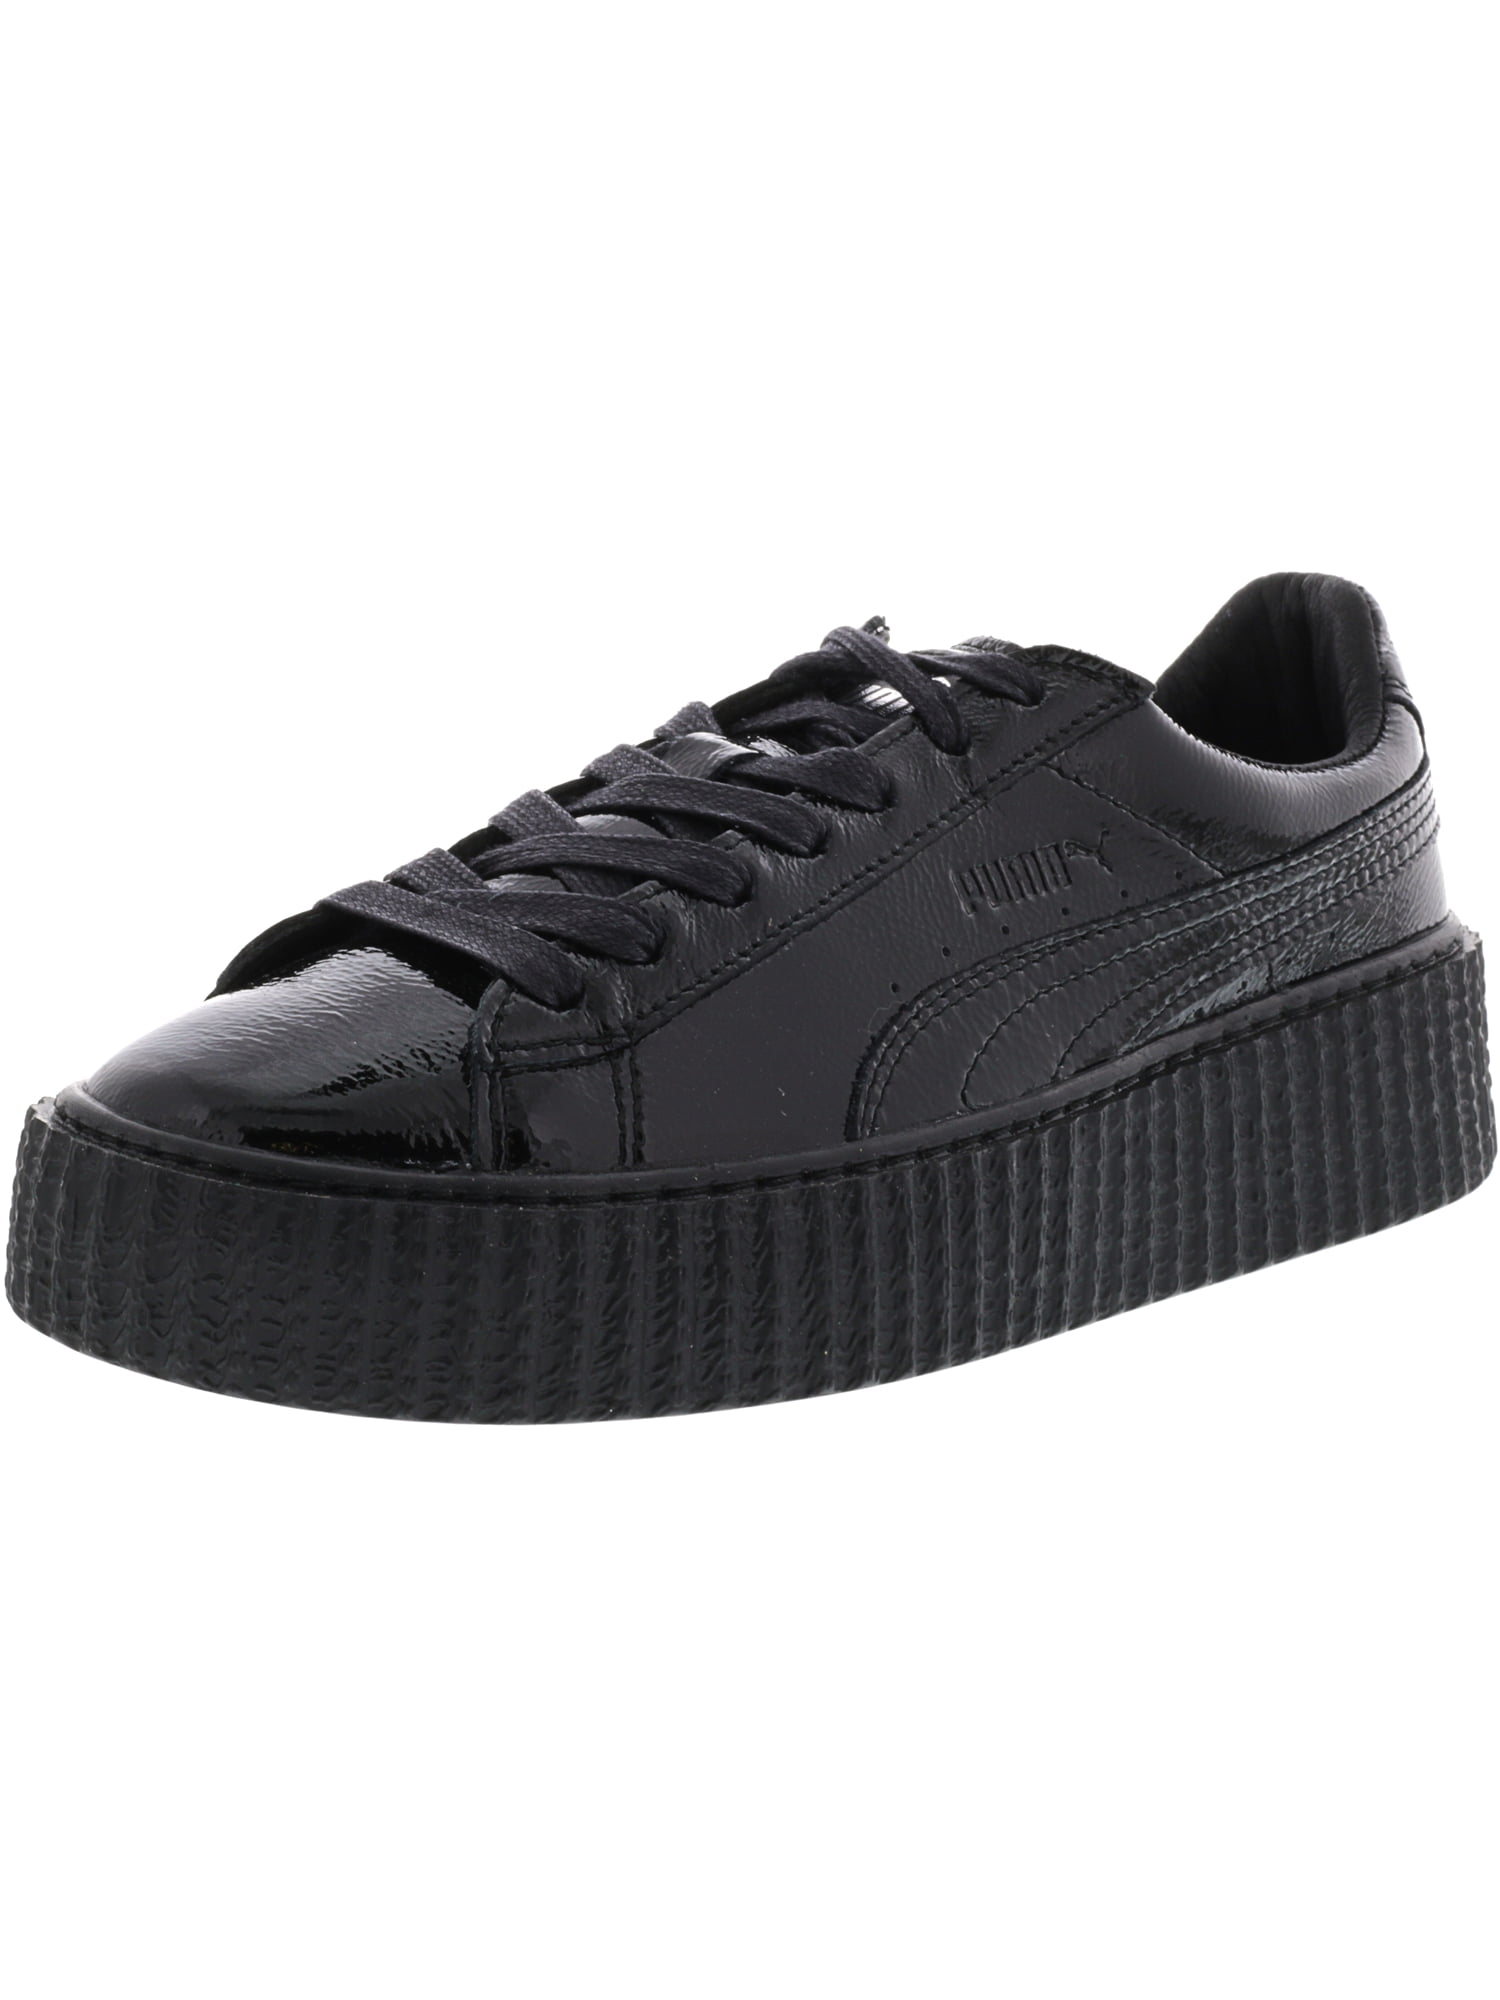 womens black leather puma shoes